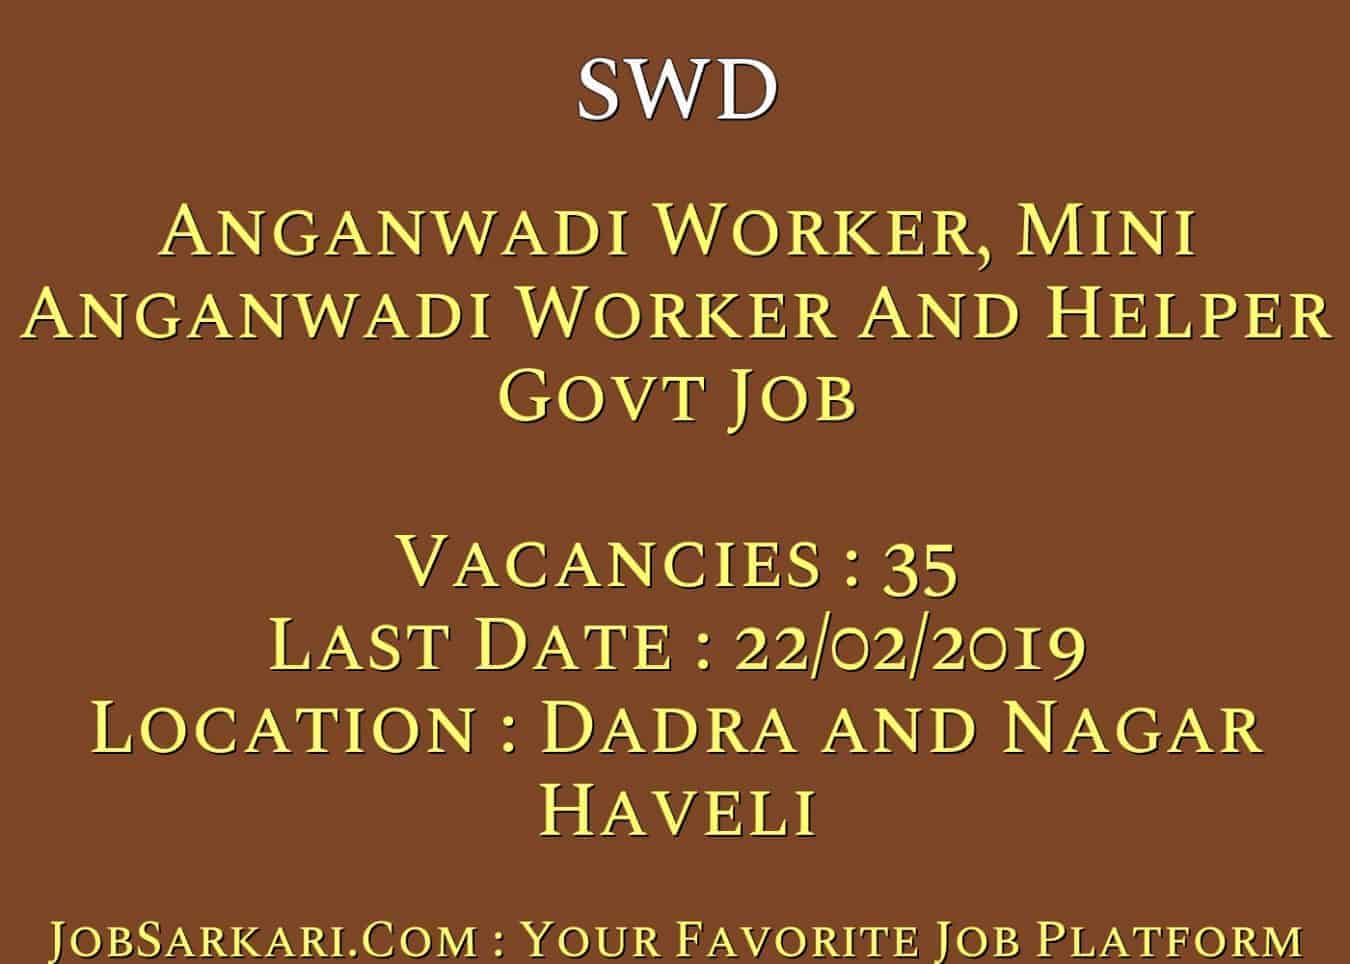 SWD Recruitment 2019 For Anganwadi Worker, Mini Anganwadi Worker And Helper Govt Job